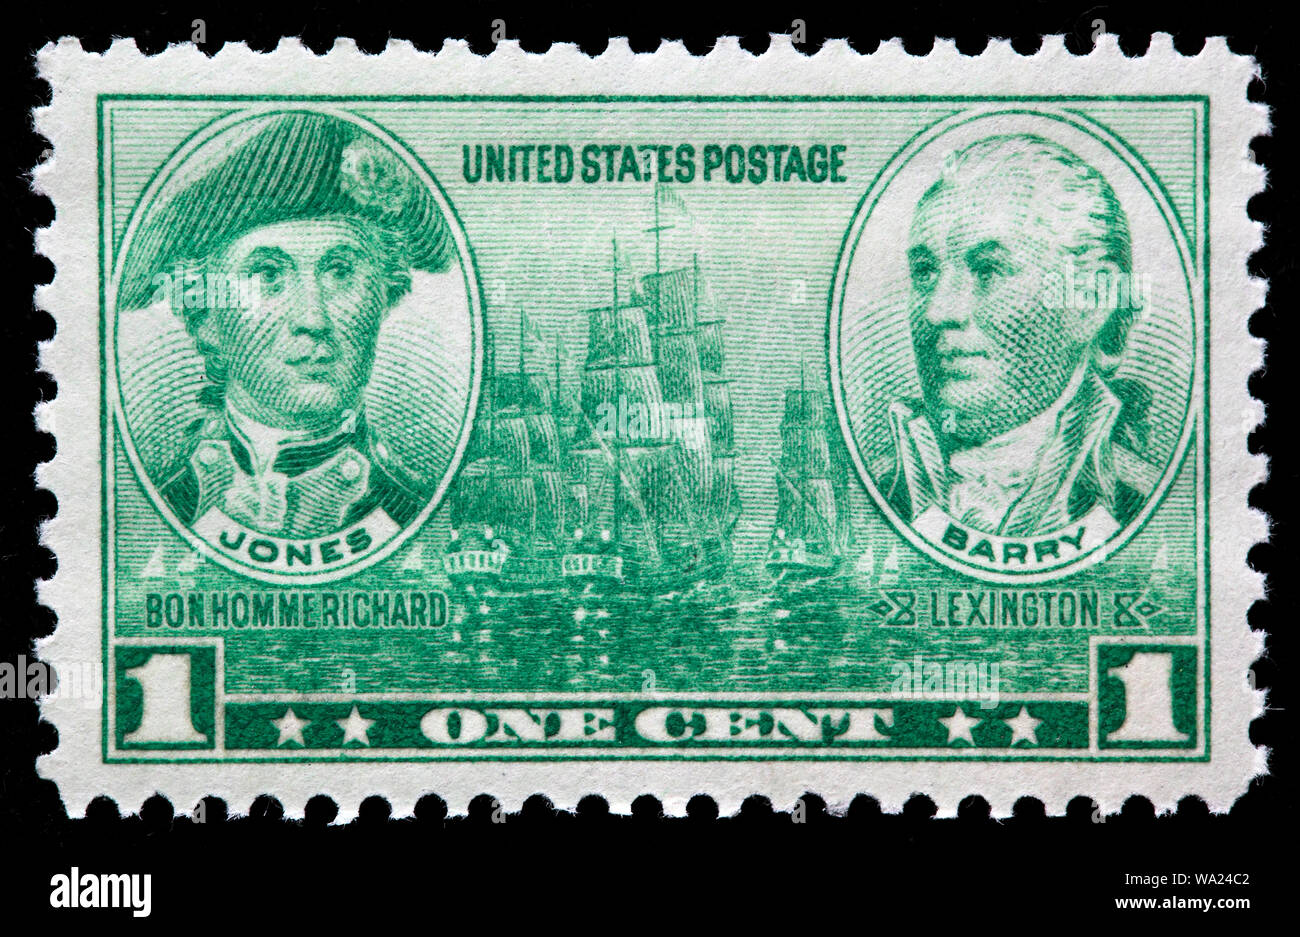 John Paul Jones (1747-1792), naval commander, John Barry (1745-1803), officer in the Continental Navy, postage stamp, USA, 1936 Stock Photo